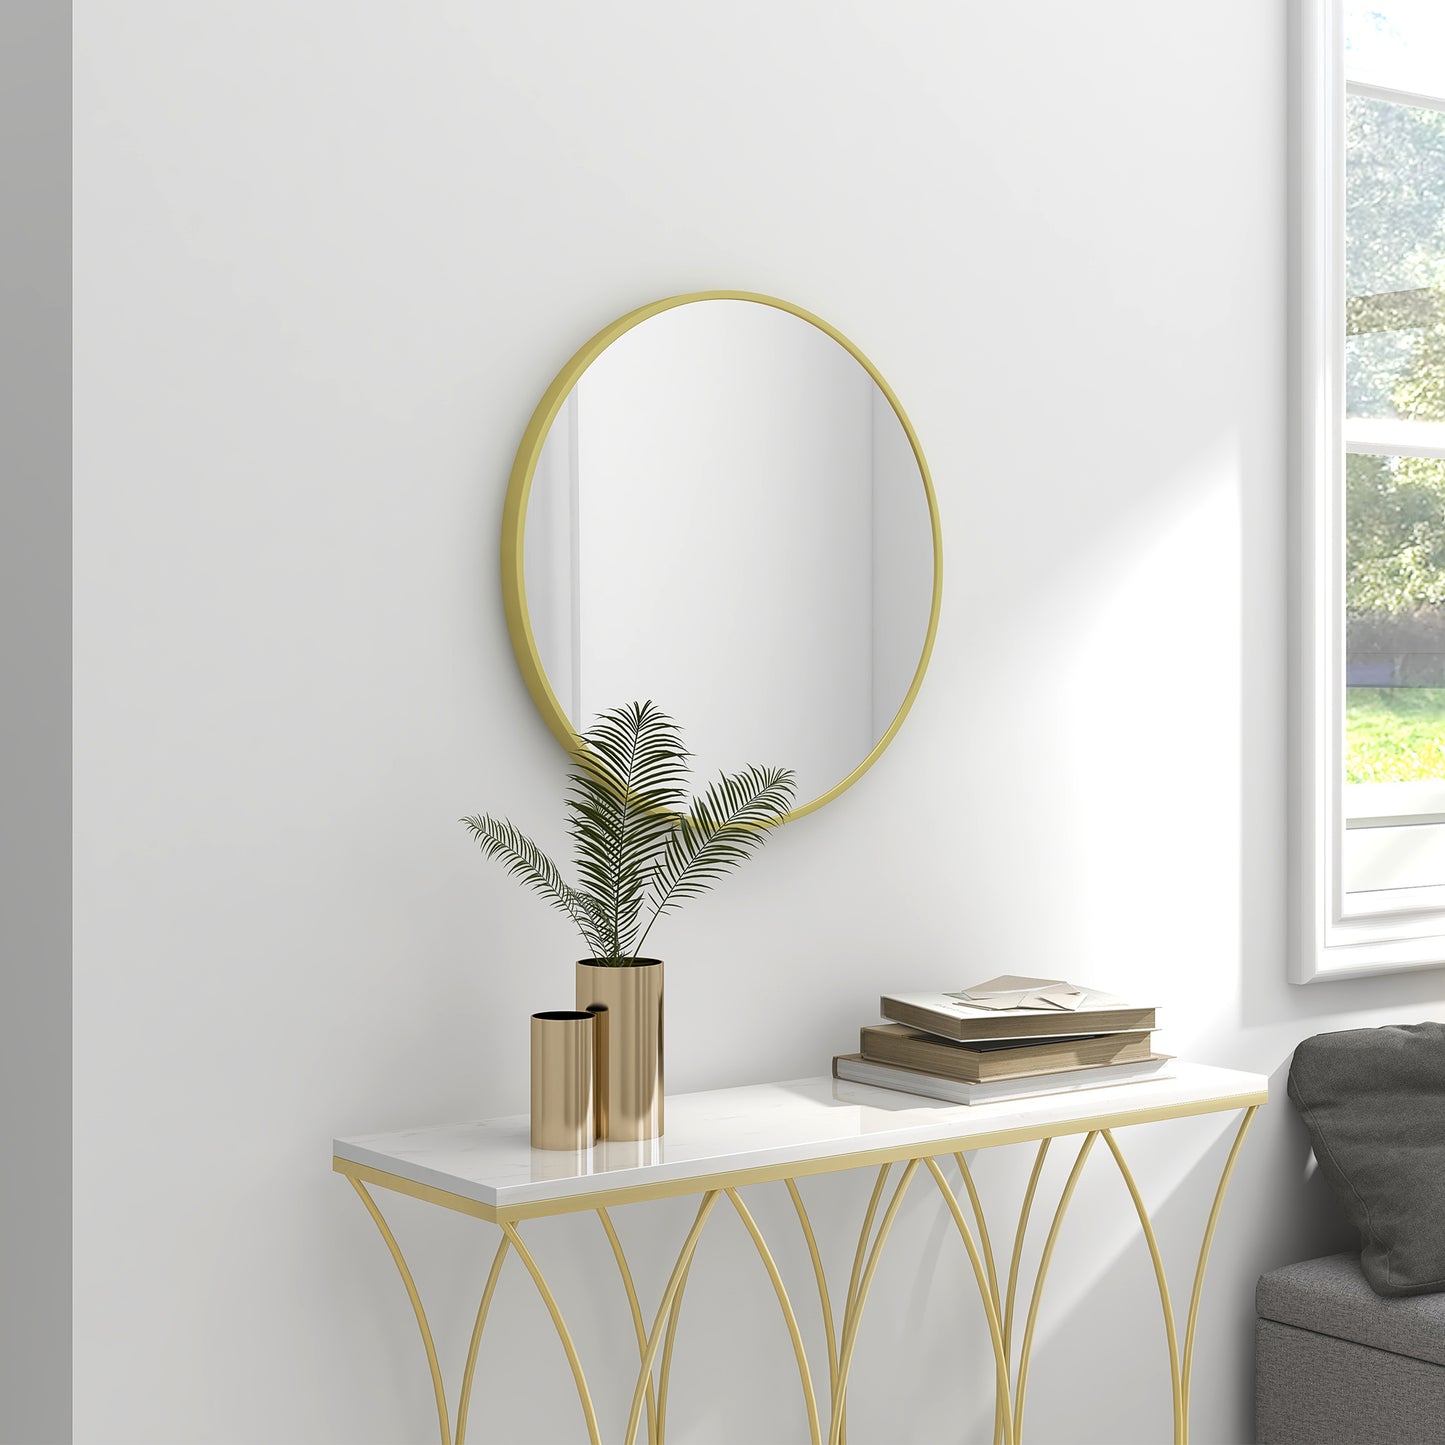 HOMCOM 60cm Round Wall-Mounted Vanity Mirror - Gold